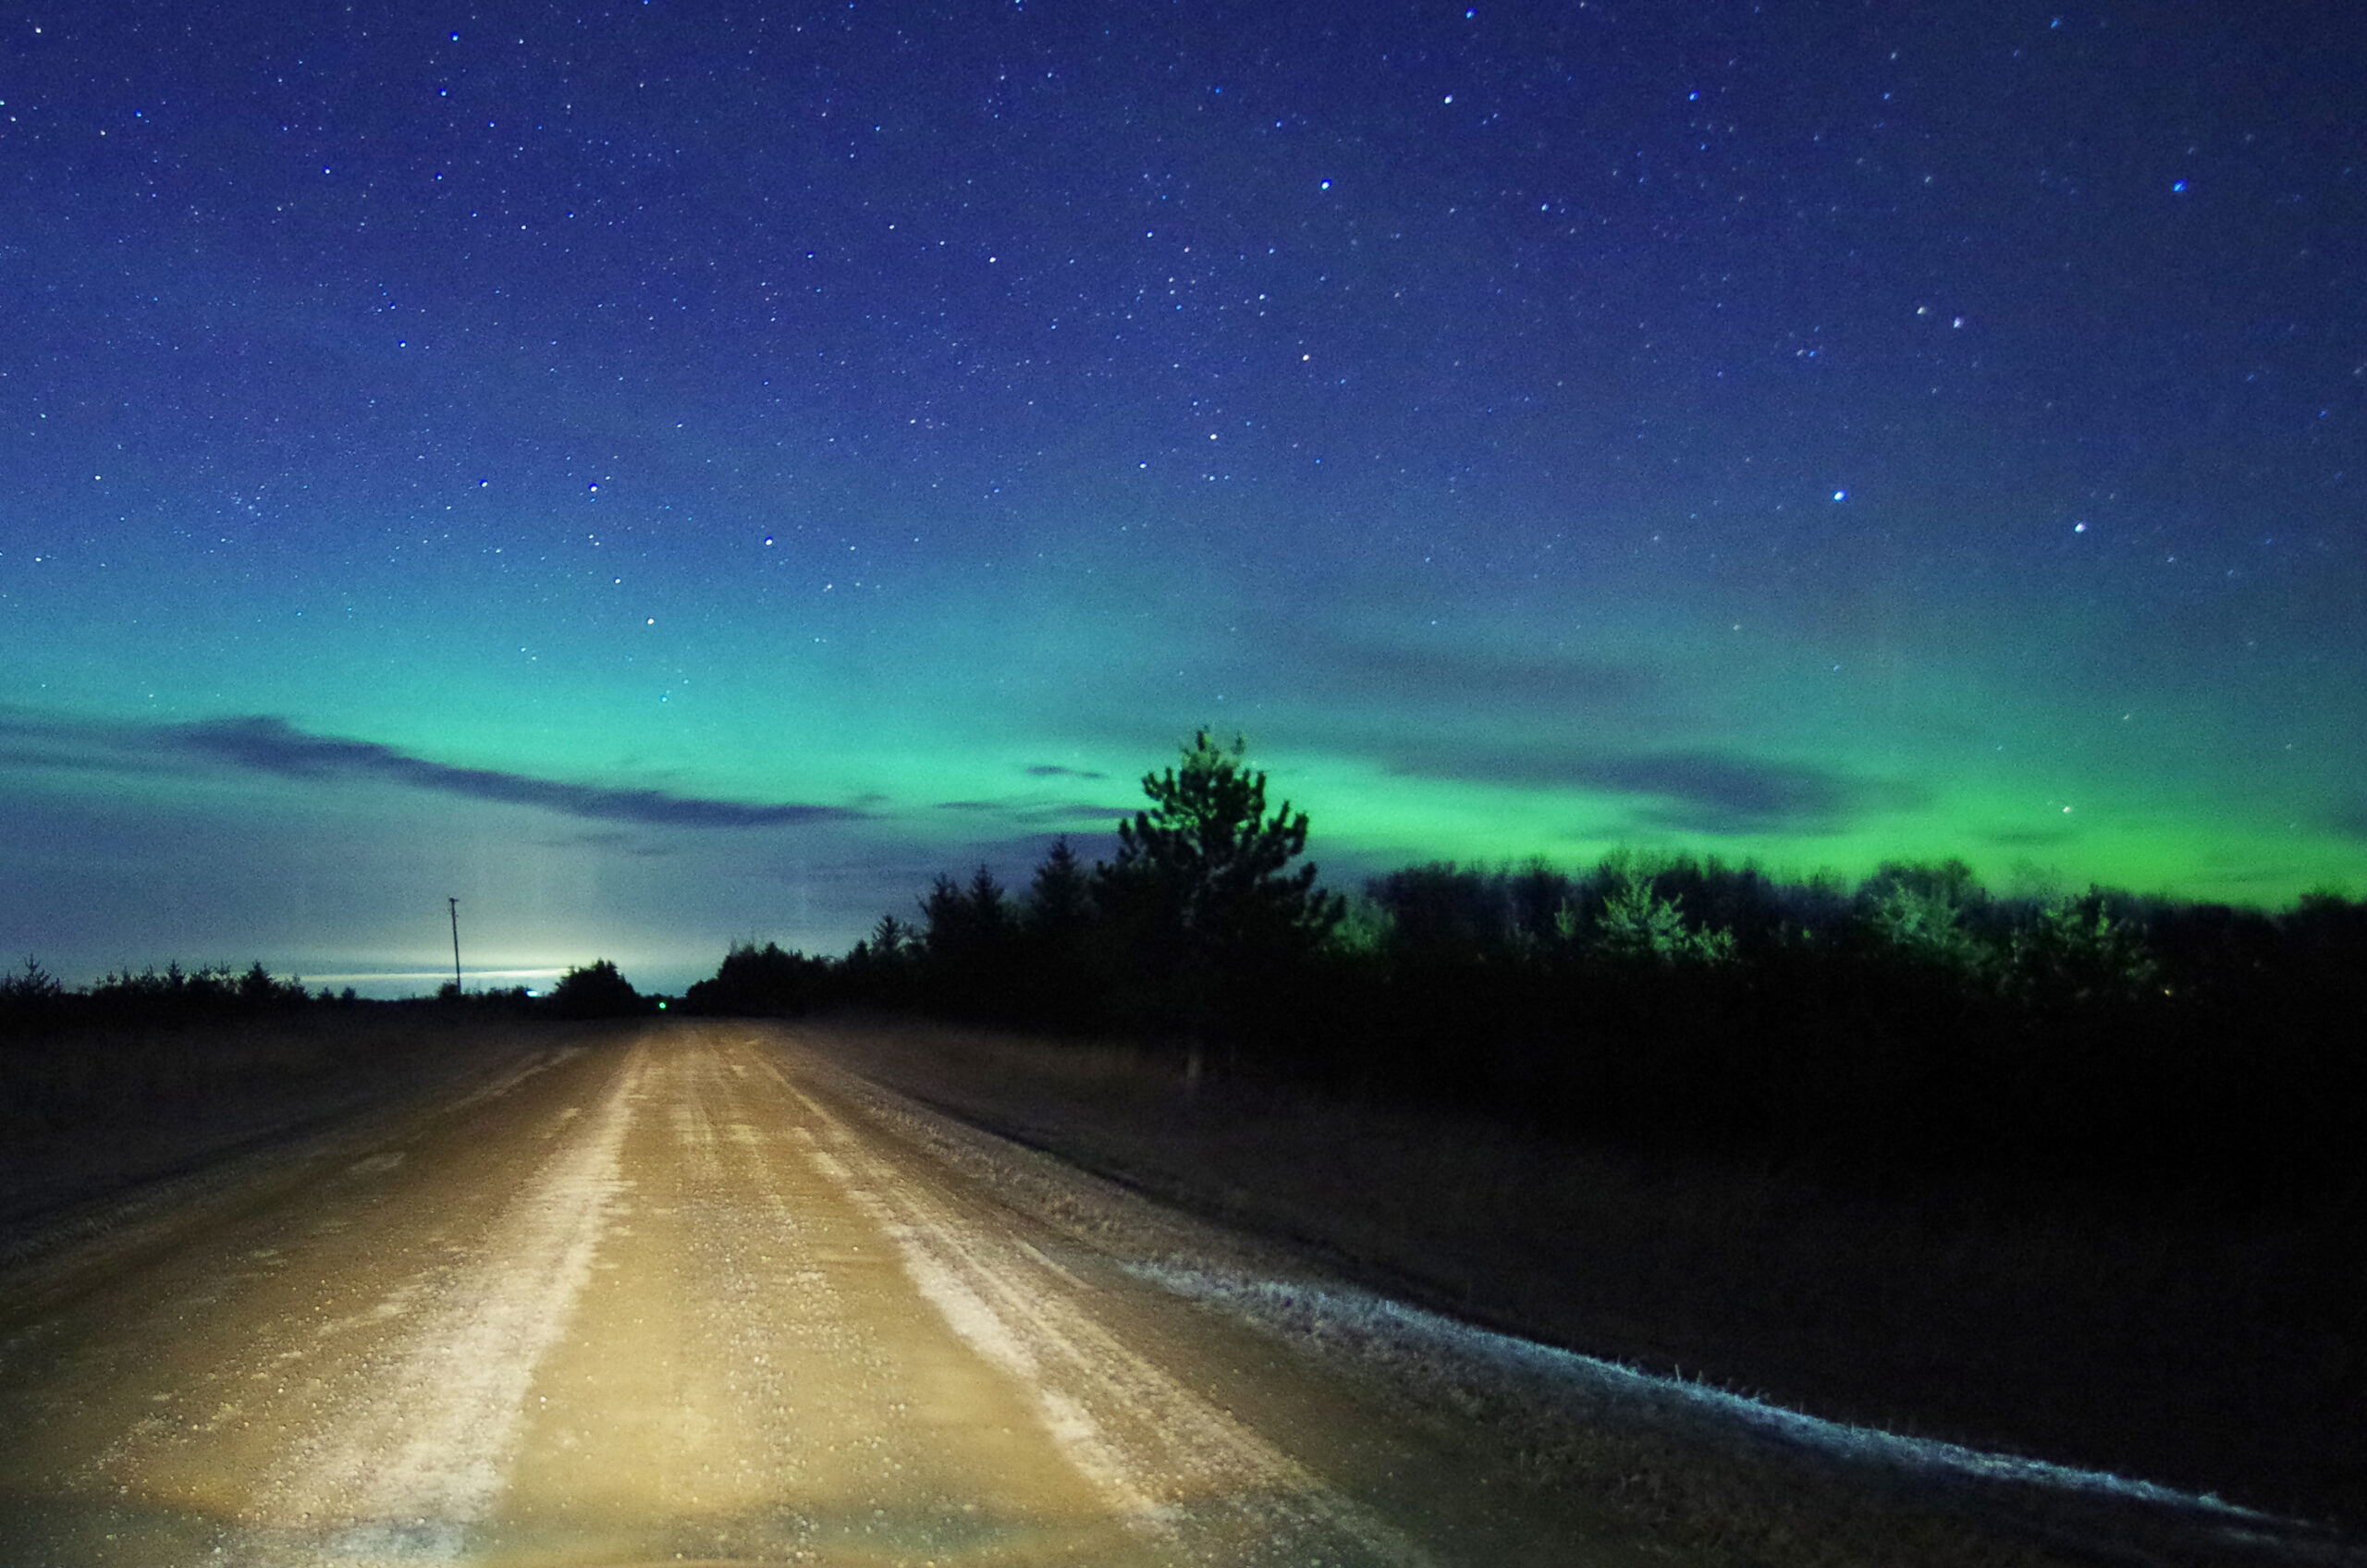 Night Sky -- Road to the Aurora, April 17, 2021 in Nevis, Minnesota